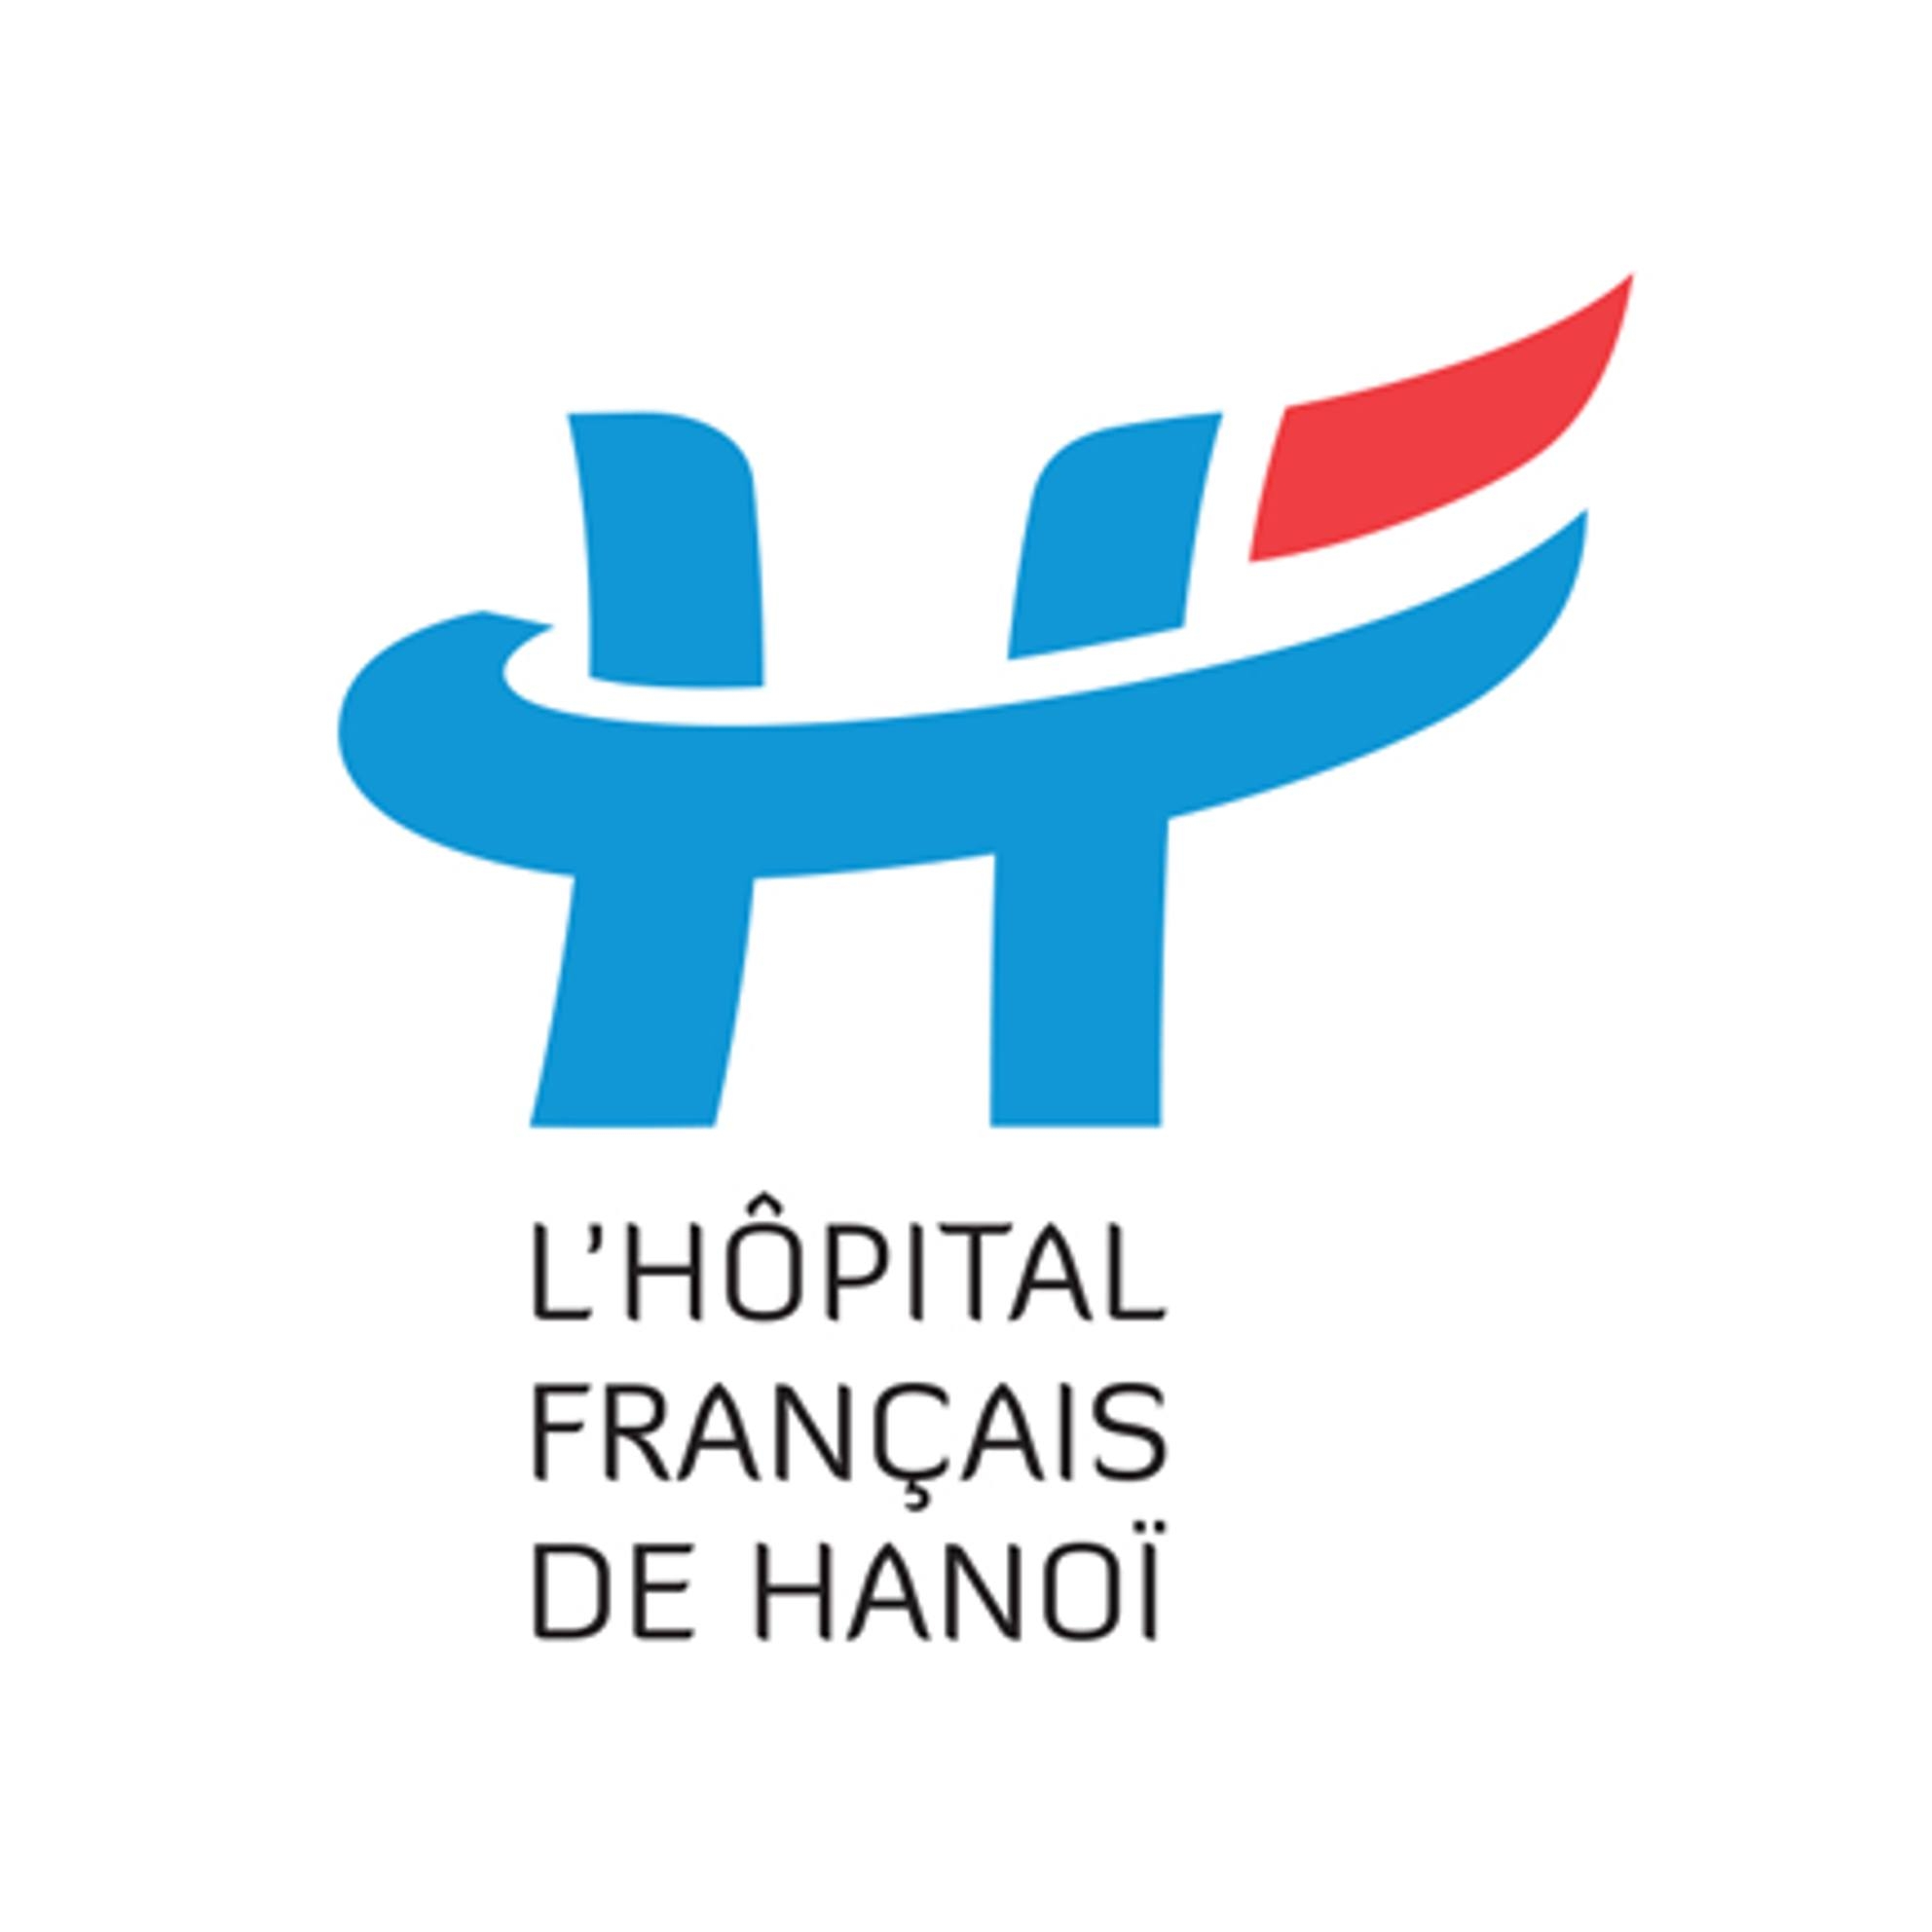 clients-logos-healthcare-4